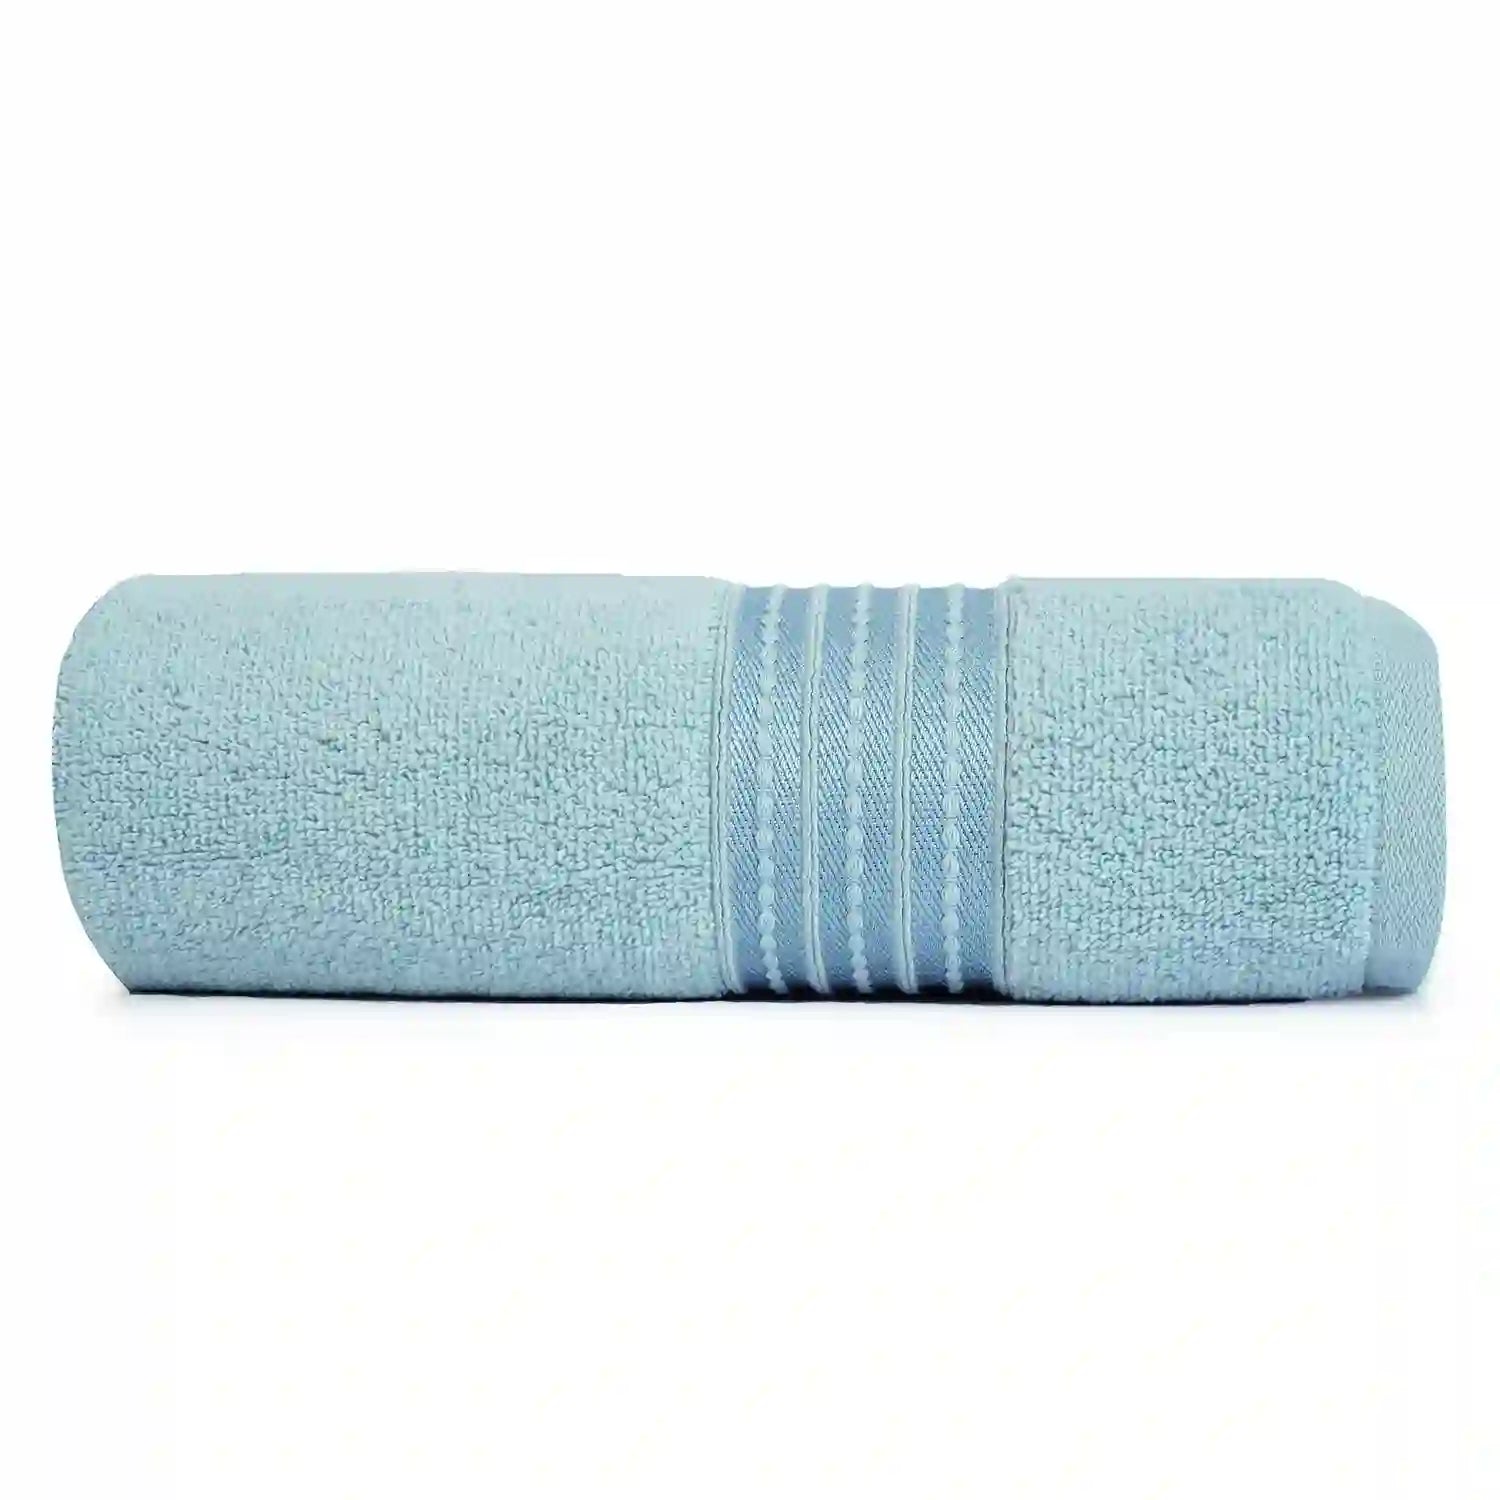 Bath towel, natural cotton bath towel, bamboo bath towel, allo vera bath towel